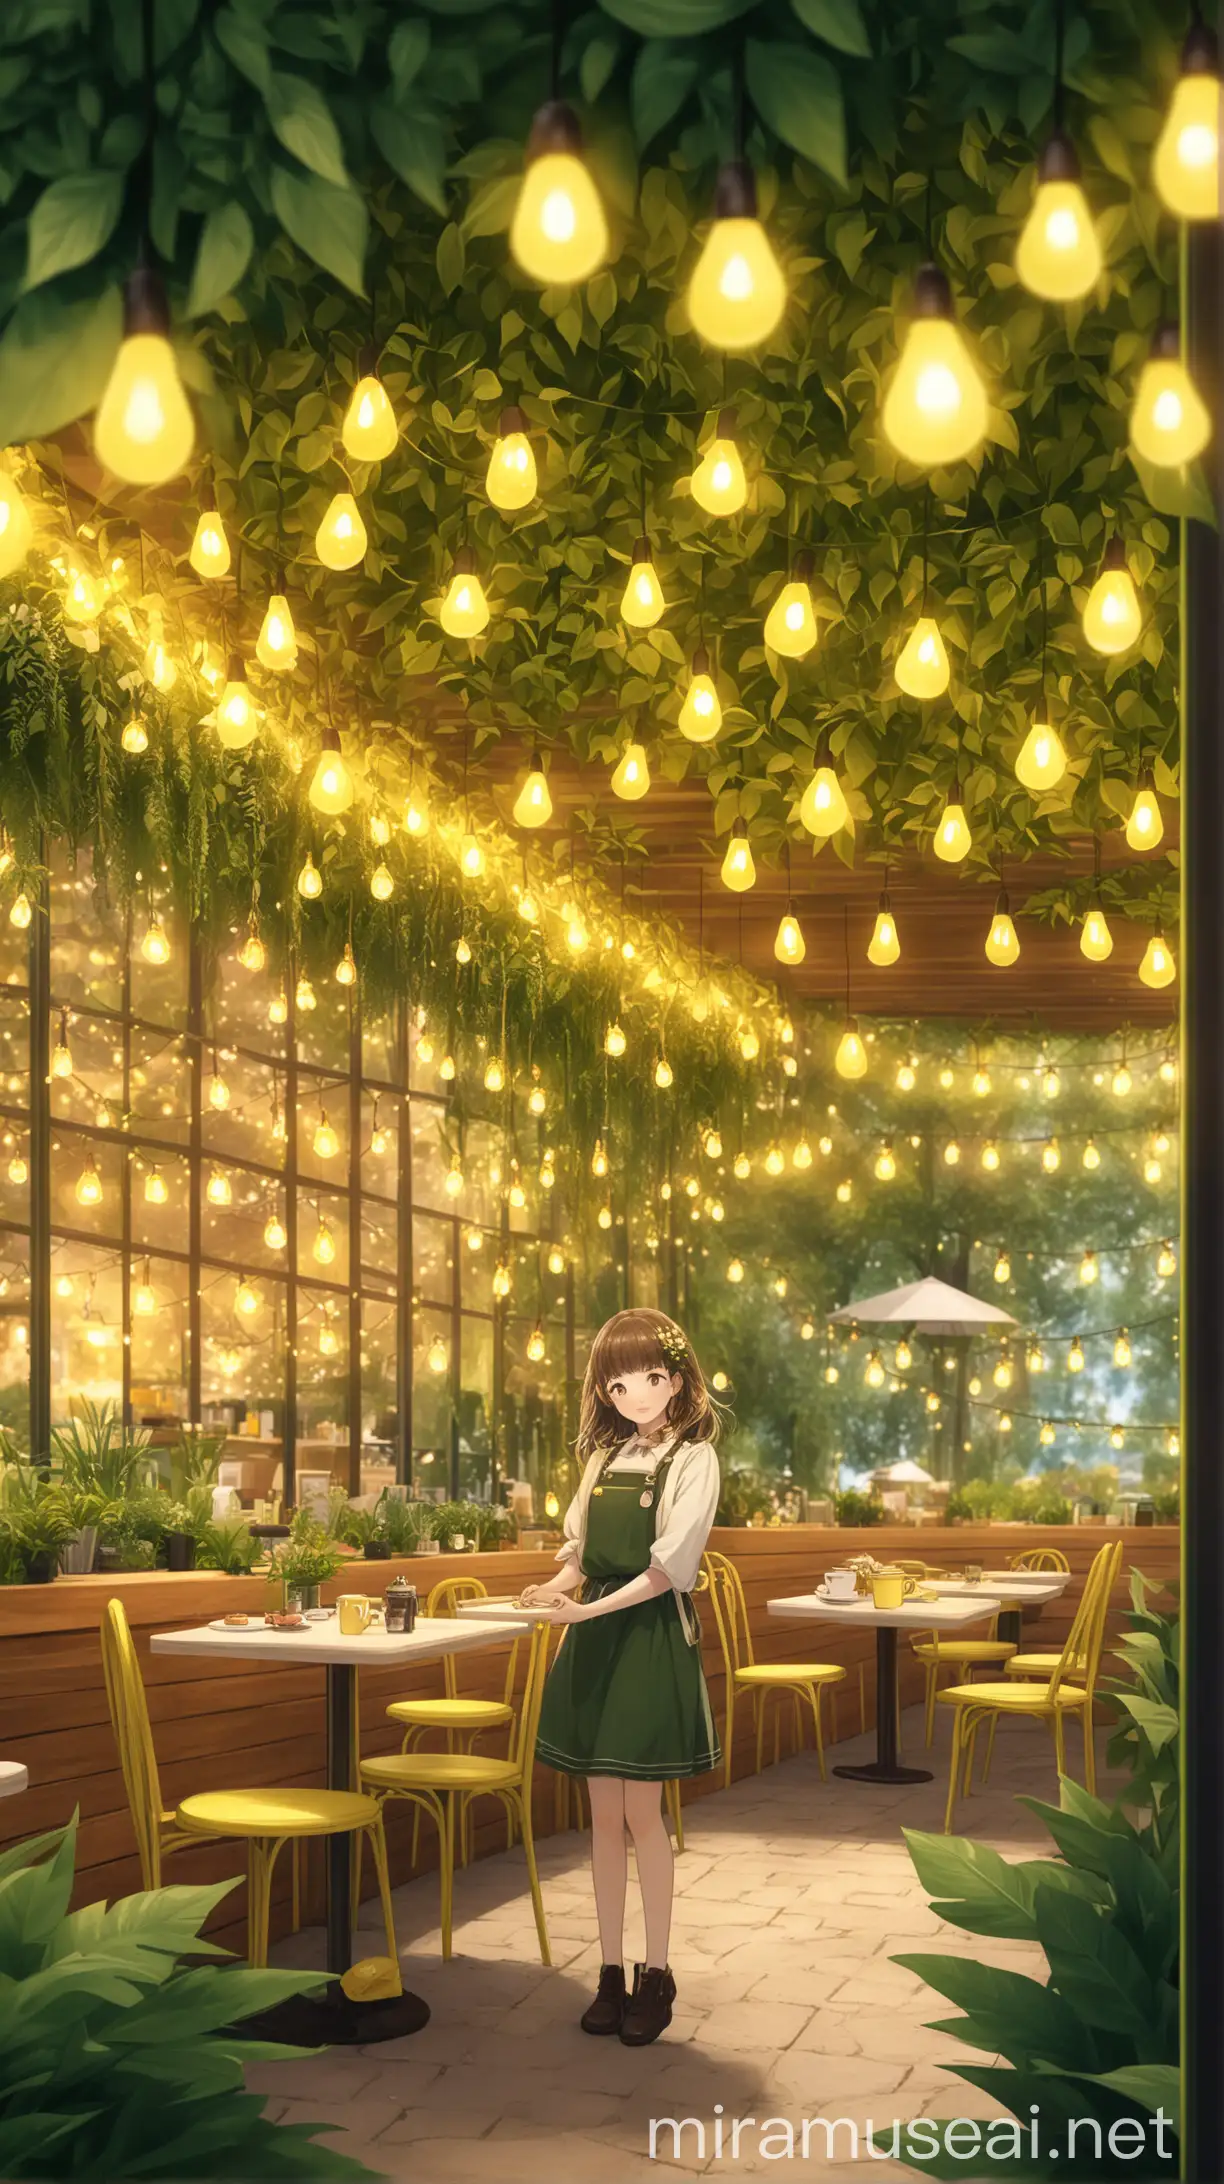 Adorable Girl Enjoying Outdoor Garden Caf with Yellow Decorative Lights